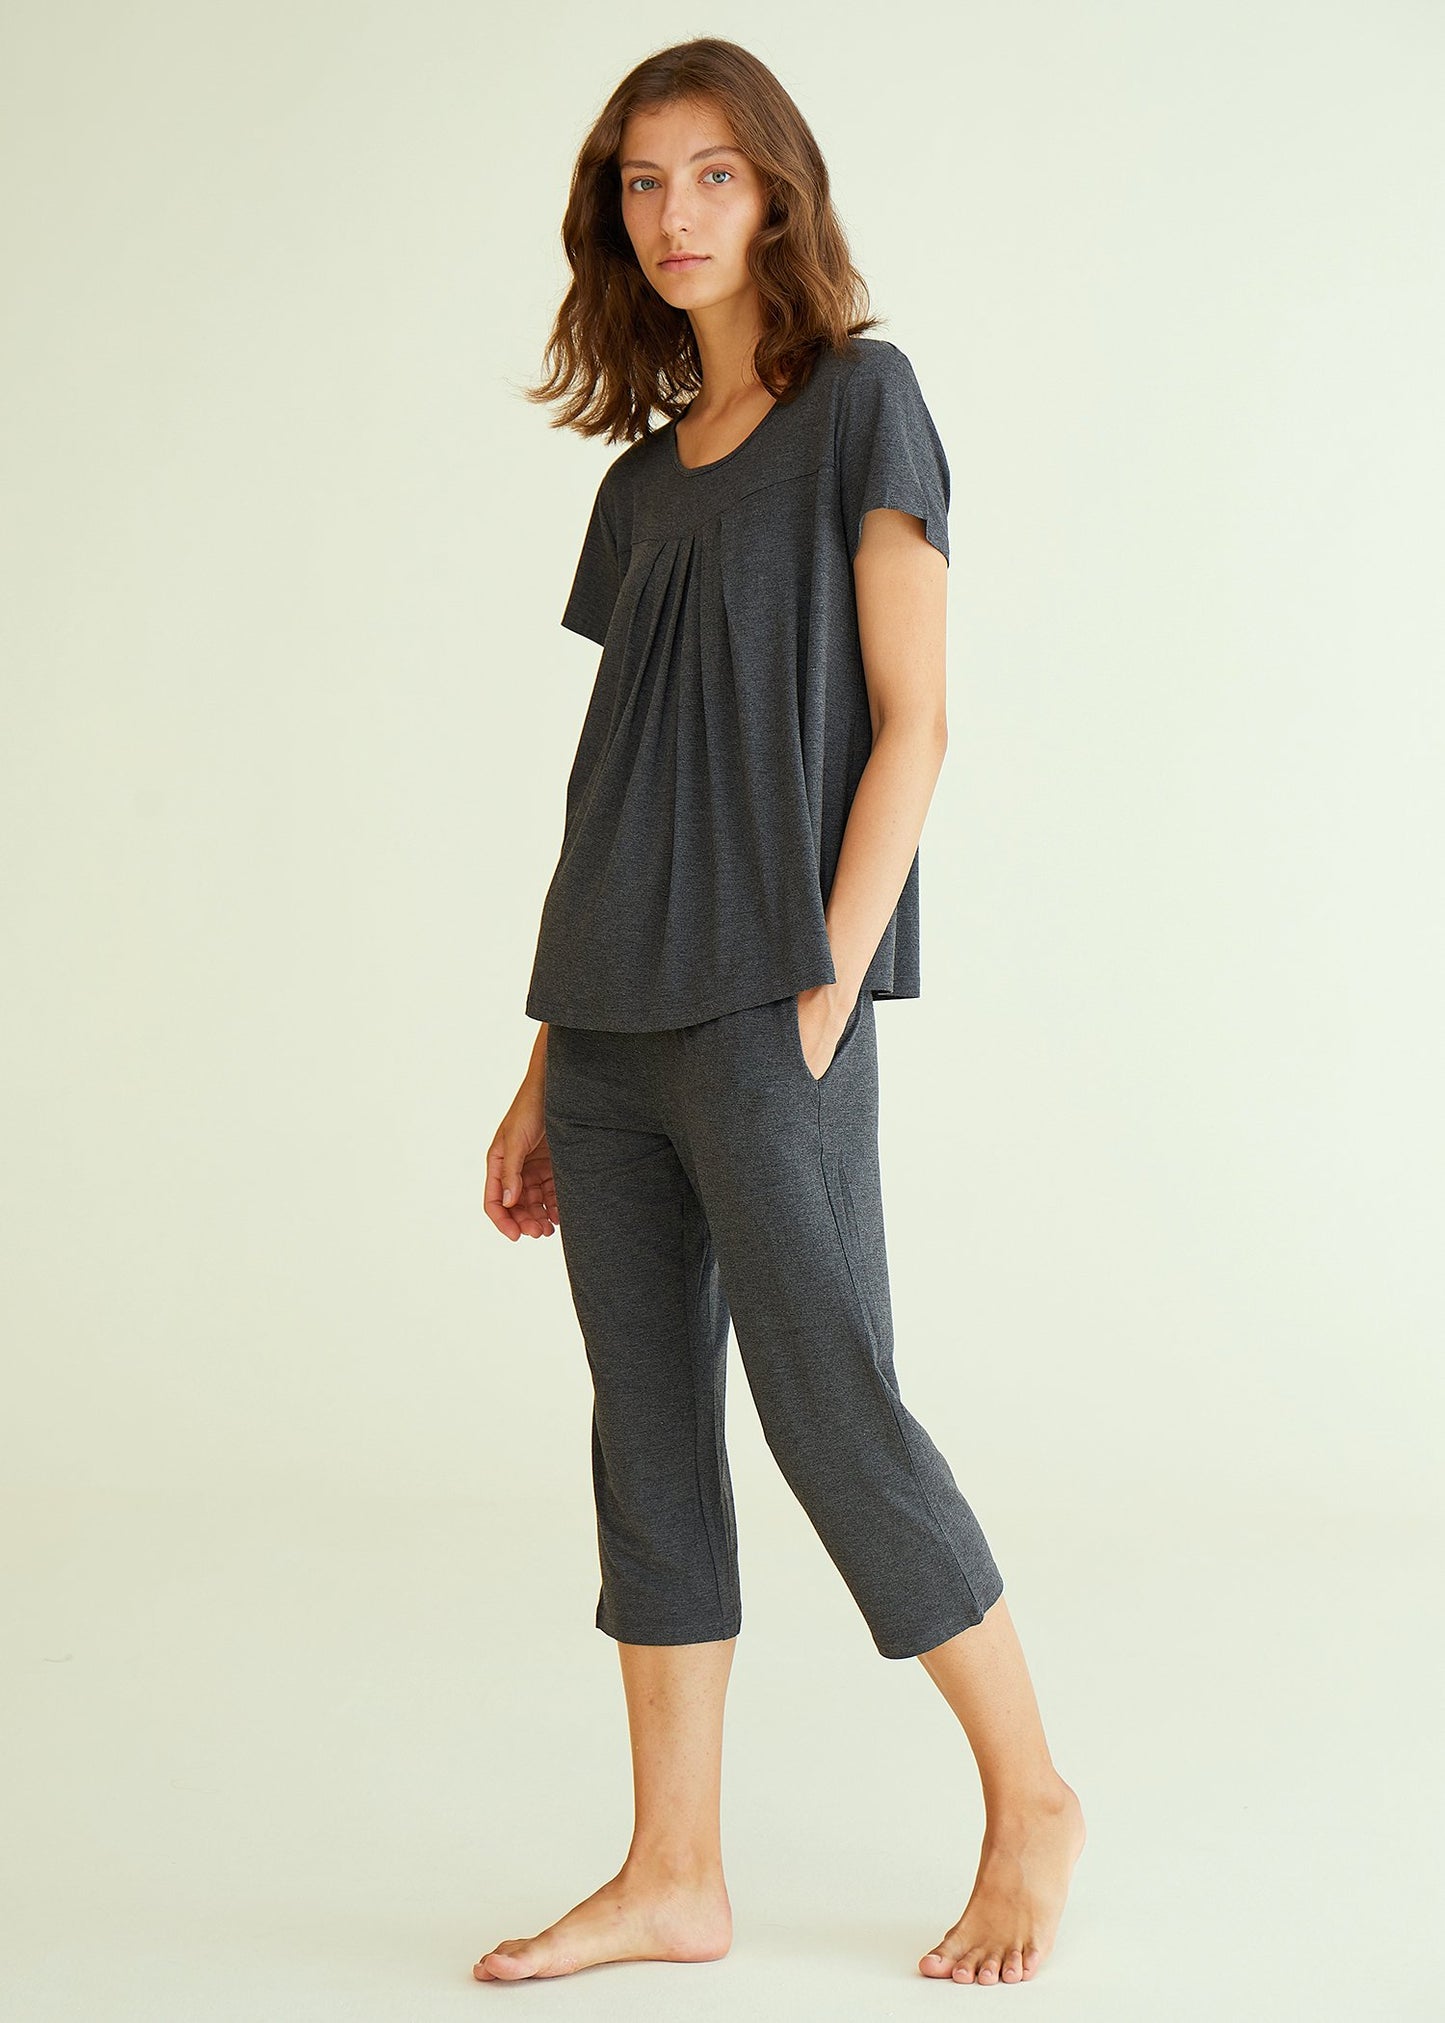 Latuza Women's Sleepwear Tops with Capri Pants Pajama Sets S Dark Gray at   Women's Clothing store